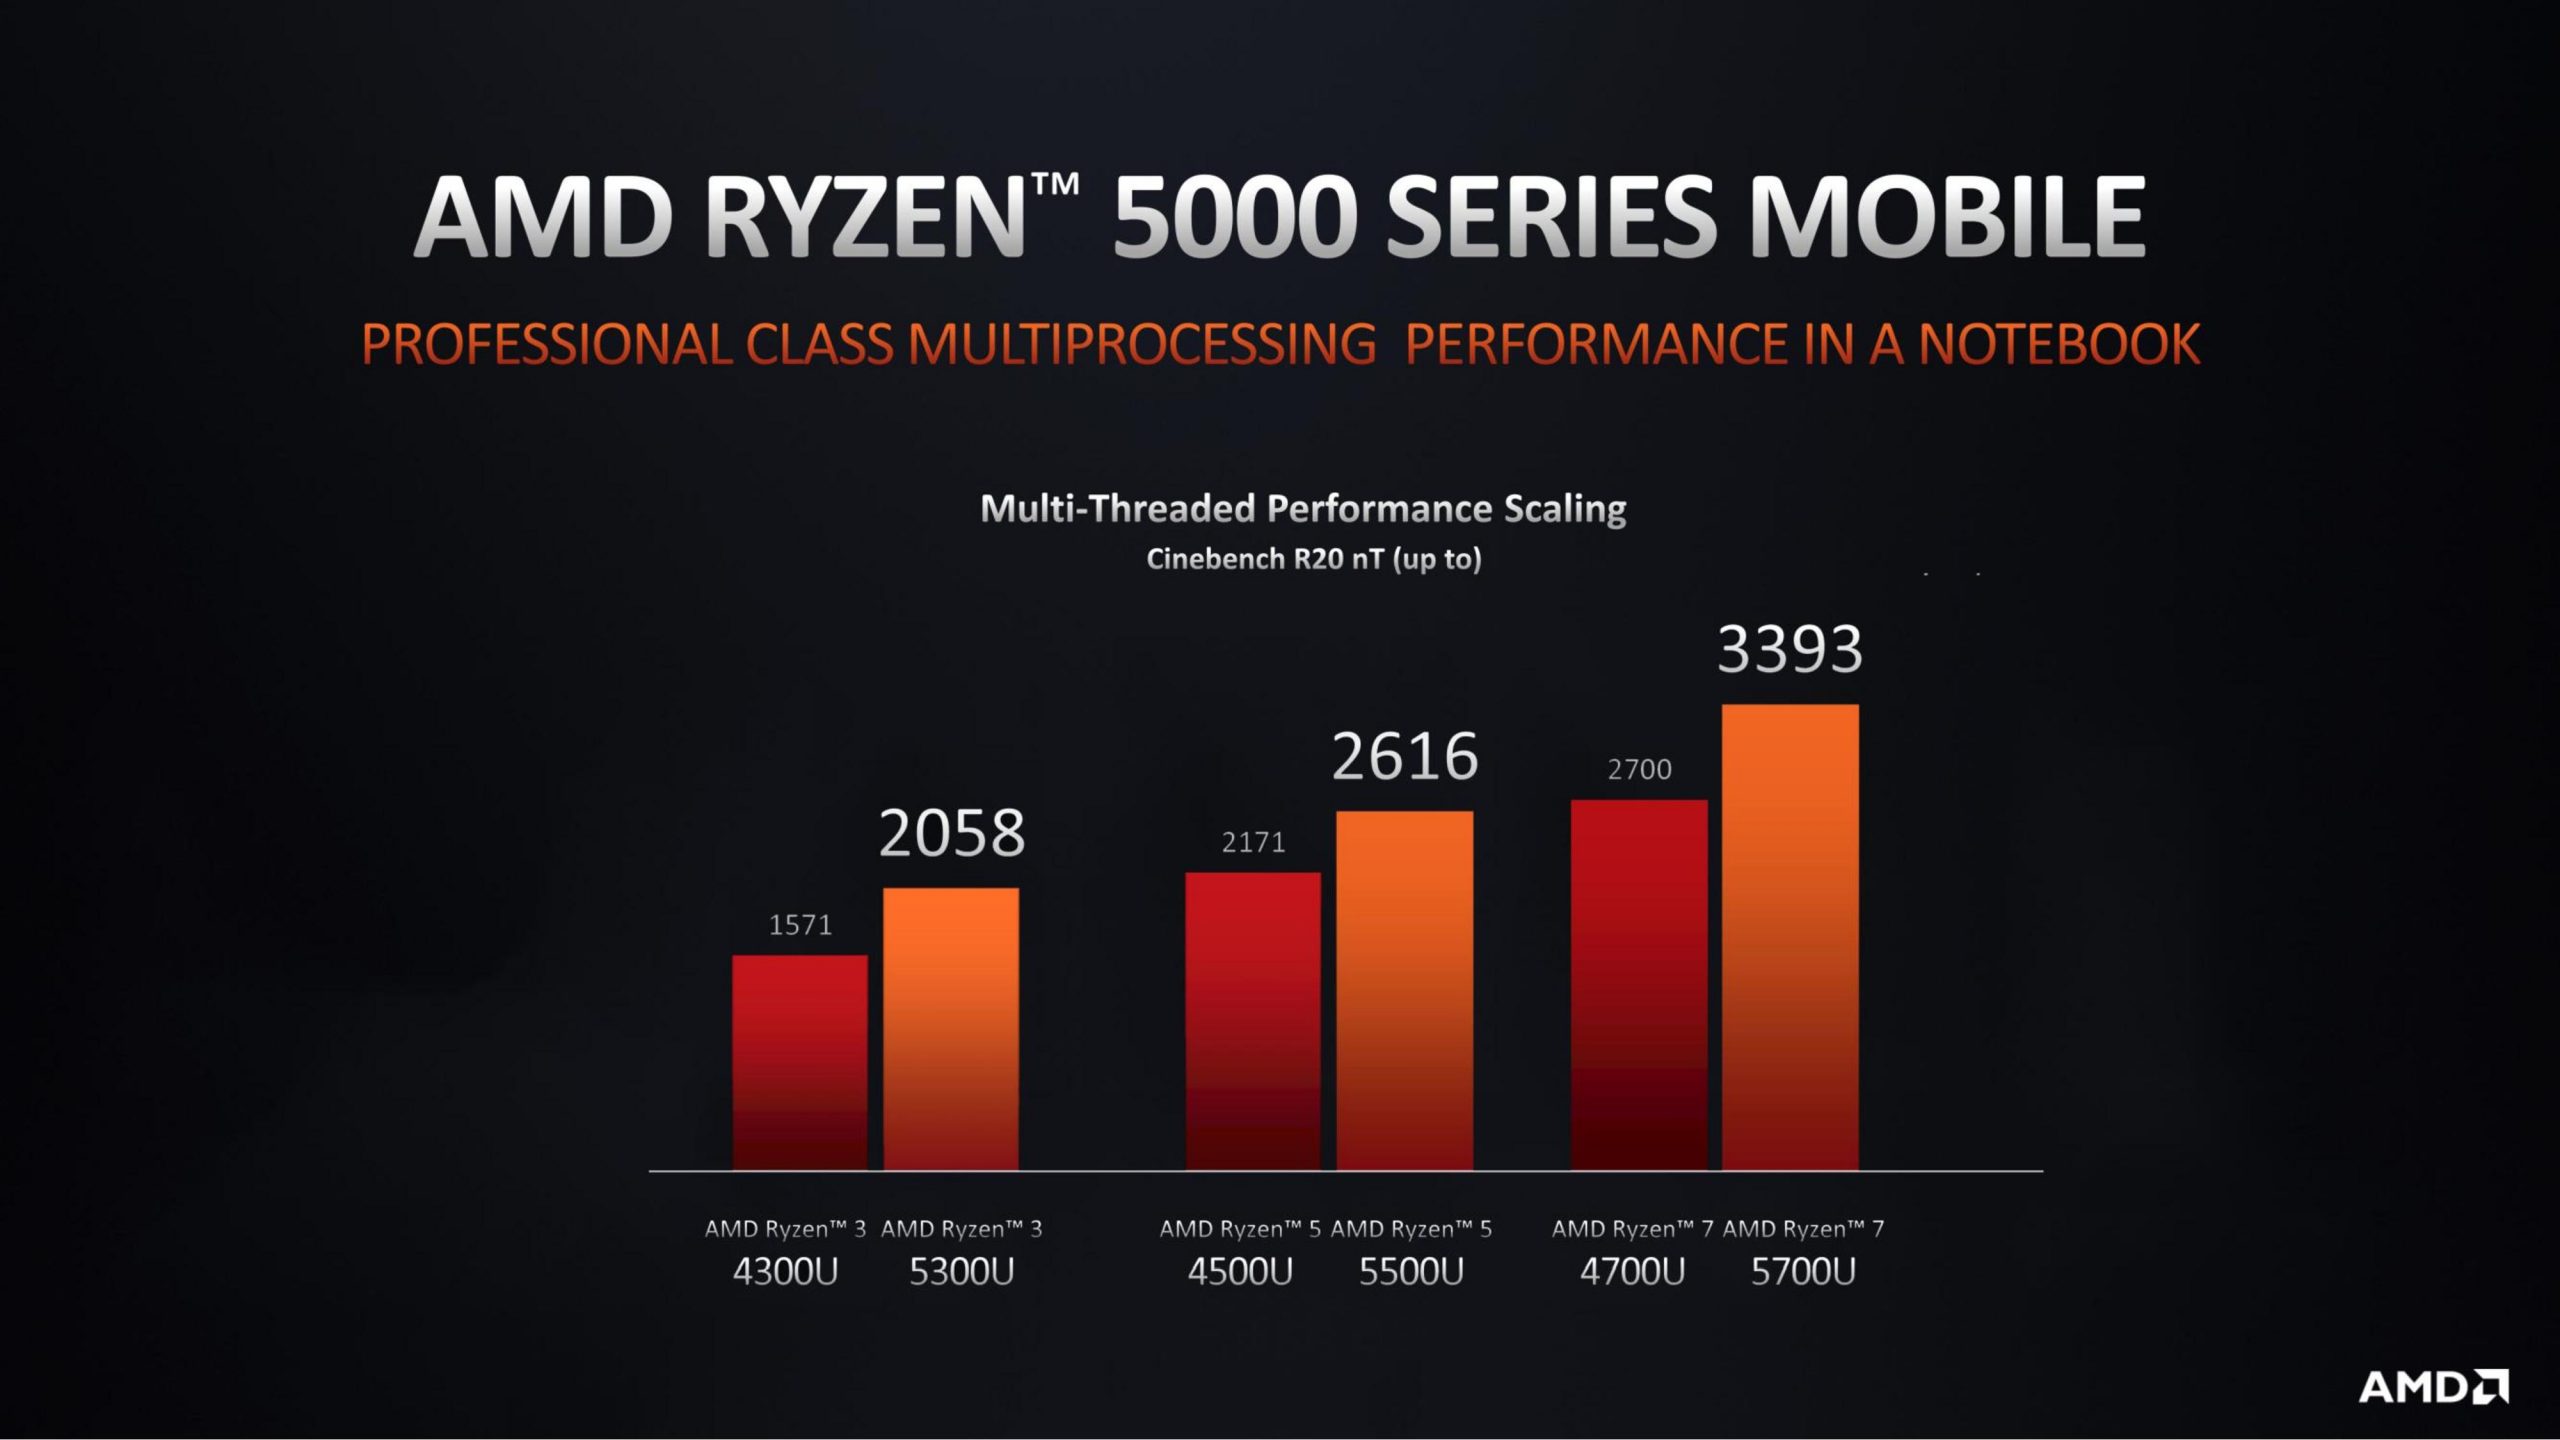 ASUS giới thiệu dải laptop năm 2021 trang bị vi xử lý AMD Ryzen 5000 series tại Việt Nam